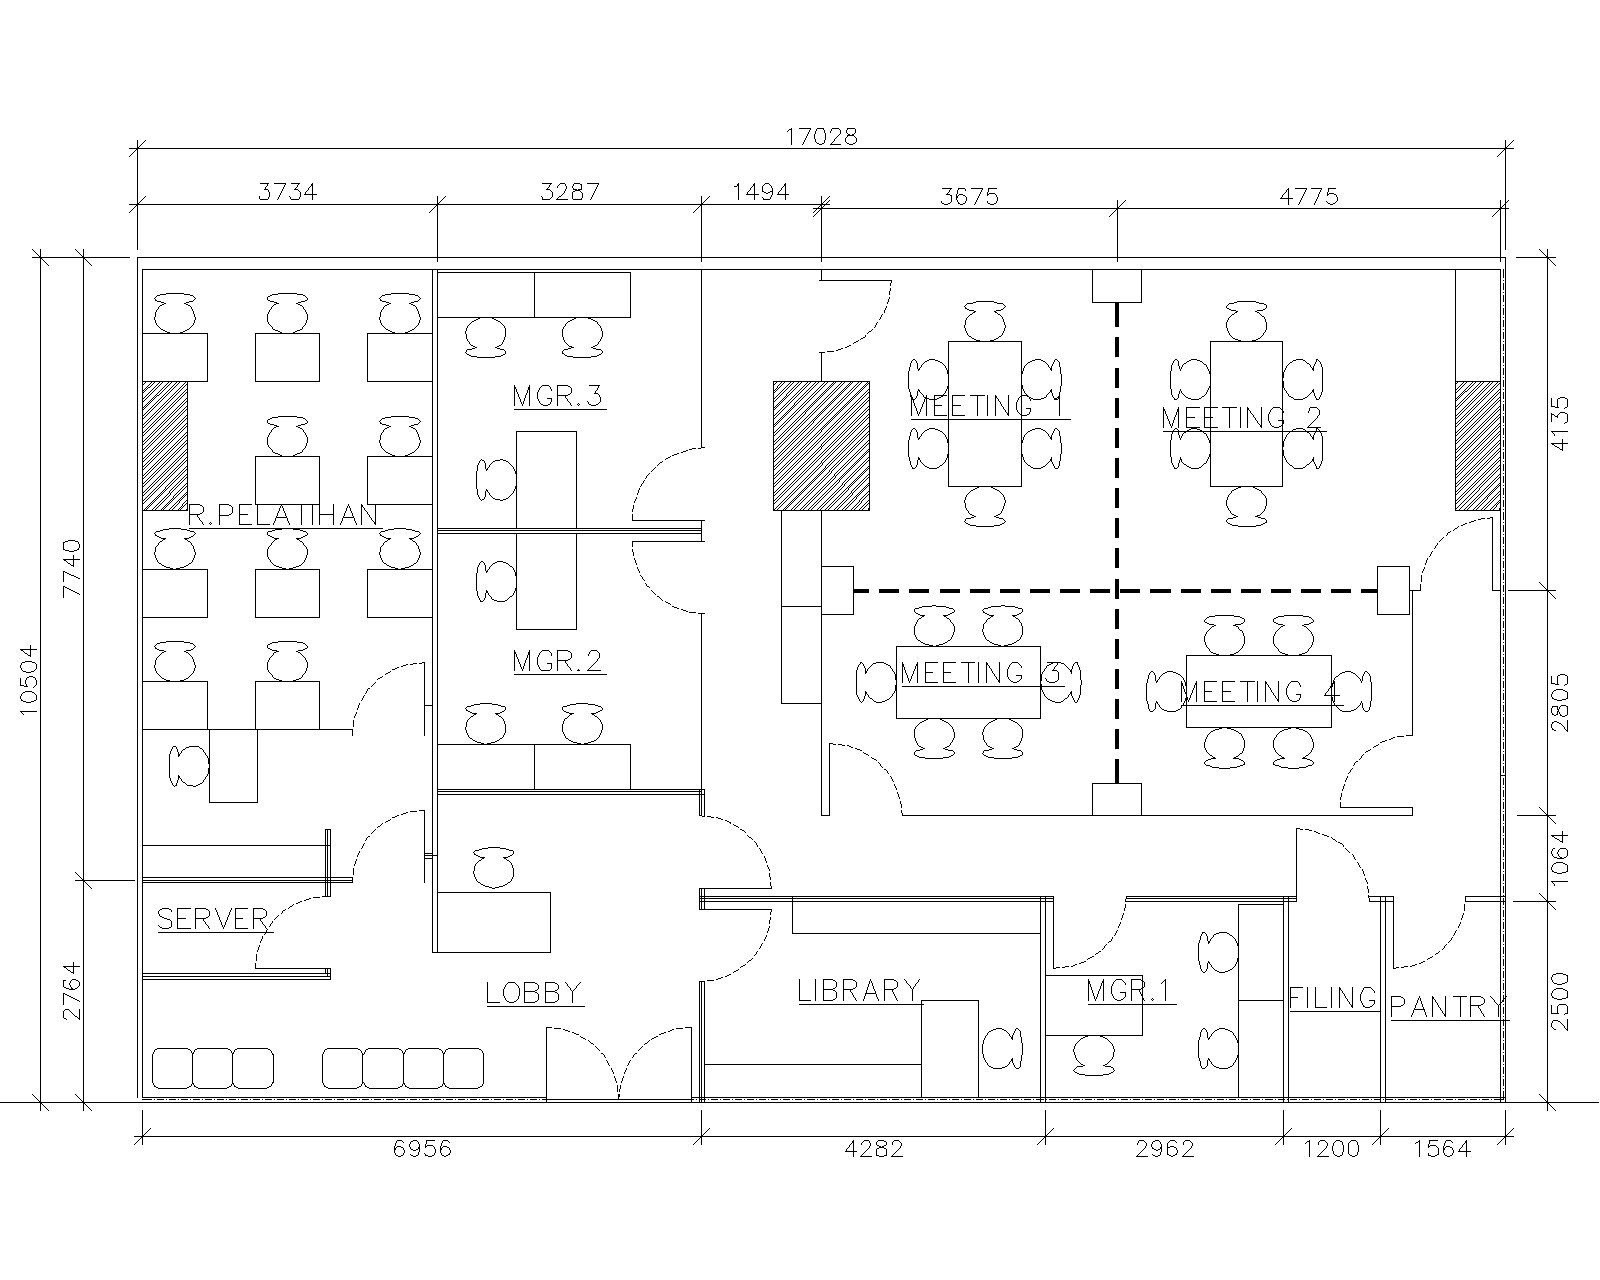 TFQ architects: Desain Proposal Interior Kantor Akuntan 